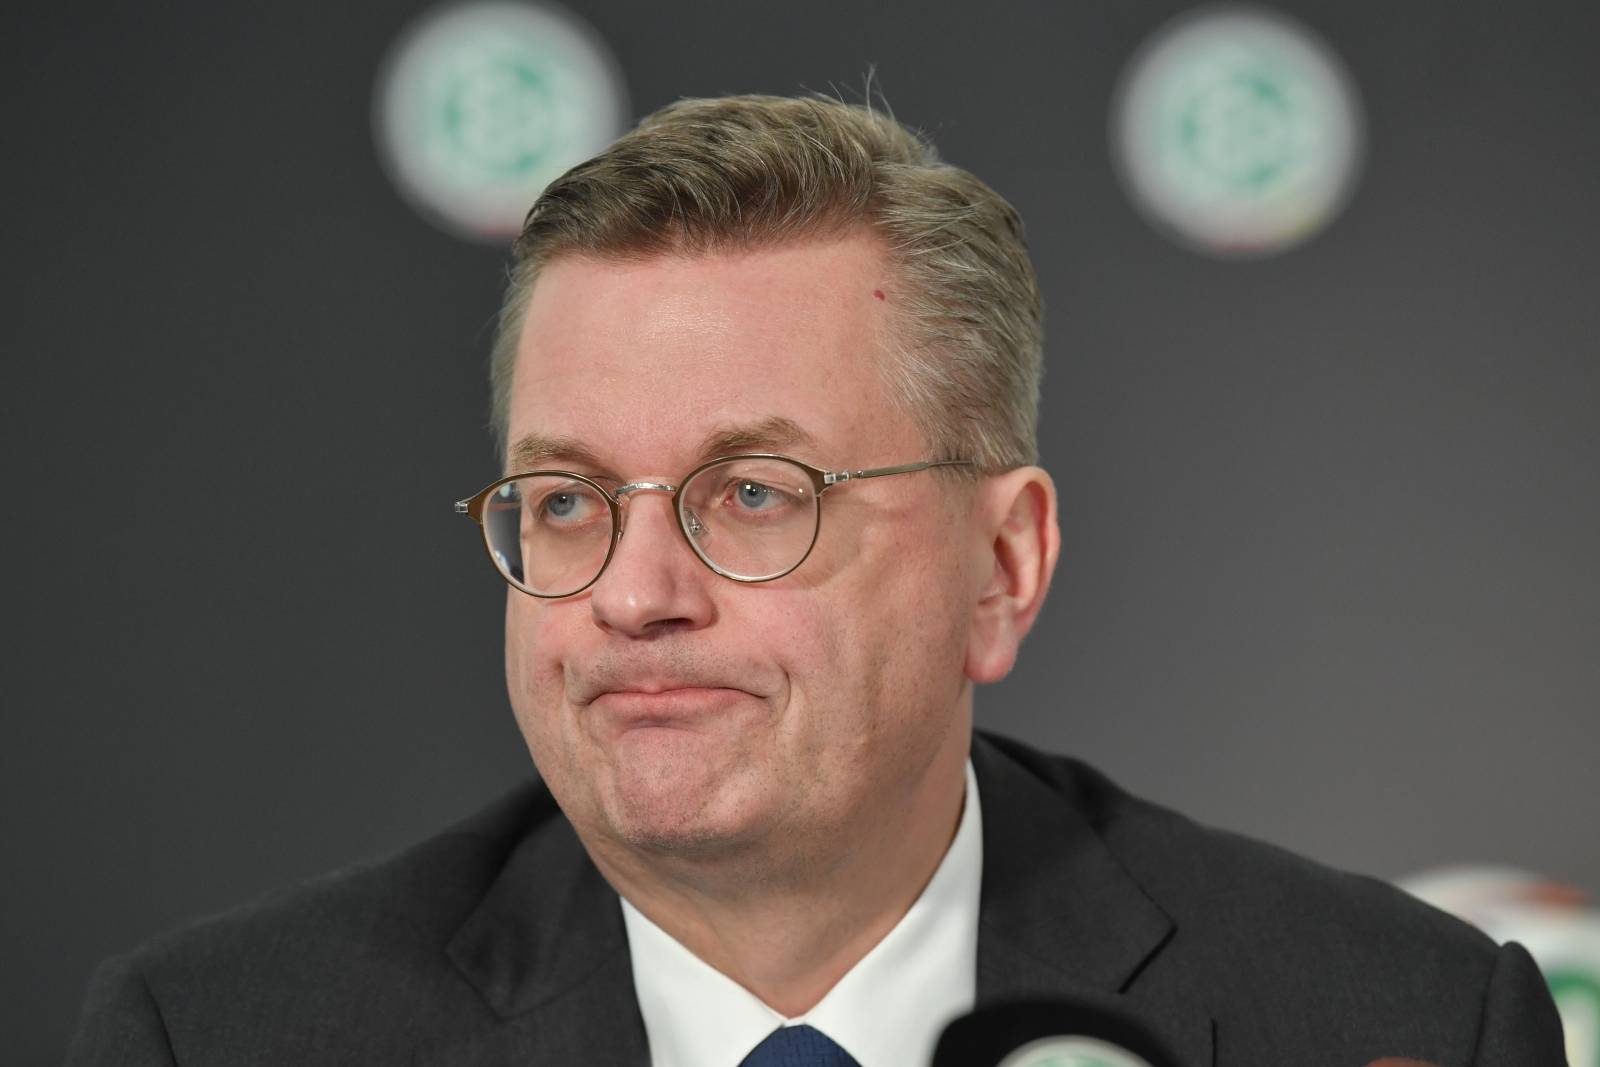 DFB president Reinhard Grindel resigns